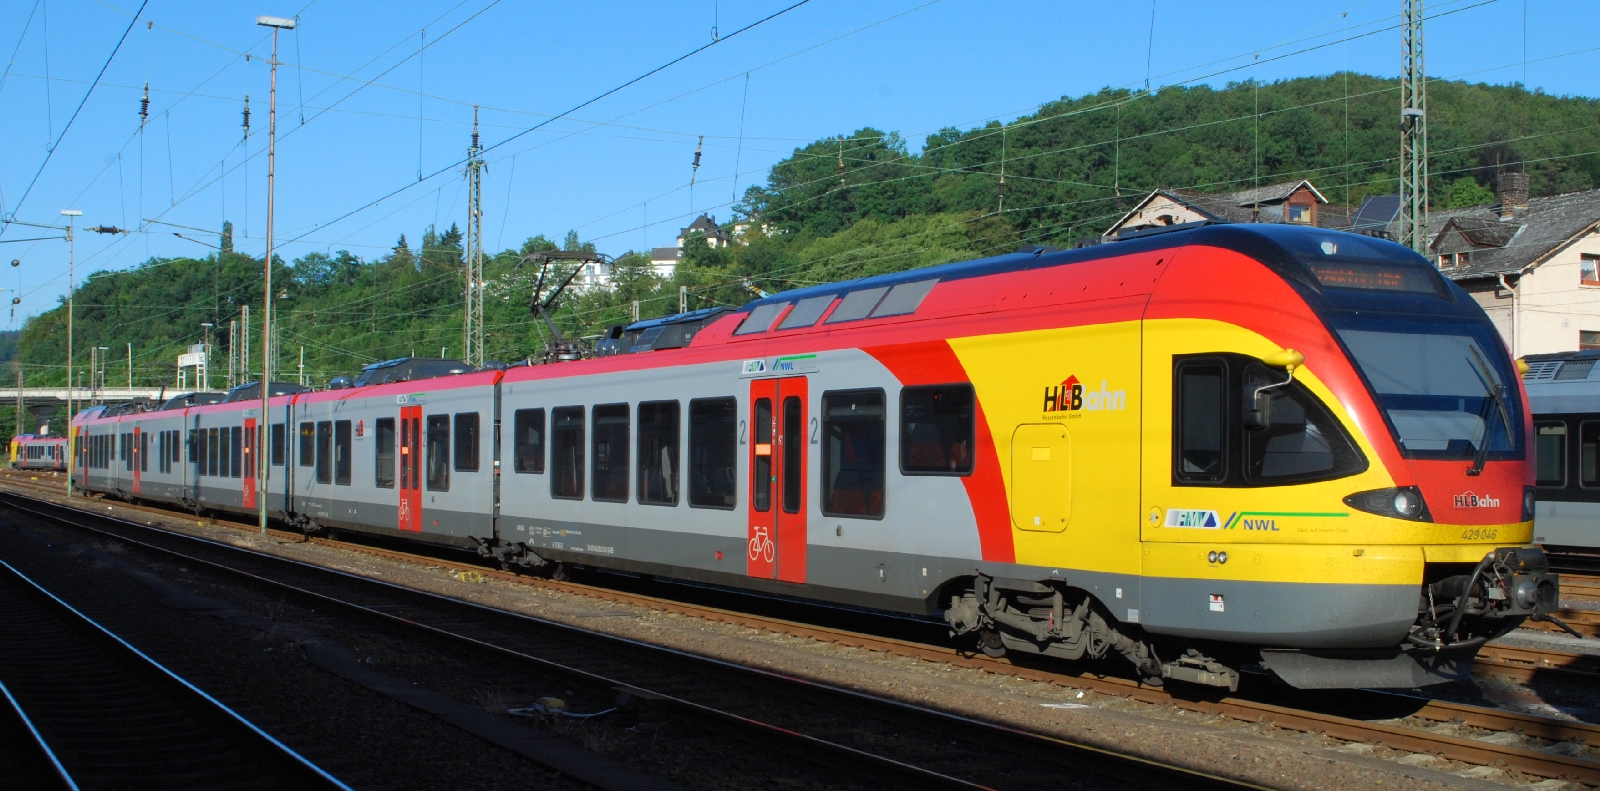 Two-car Flirt 2 of the Hessische Landesbahn in June 2011 in Siegen